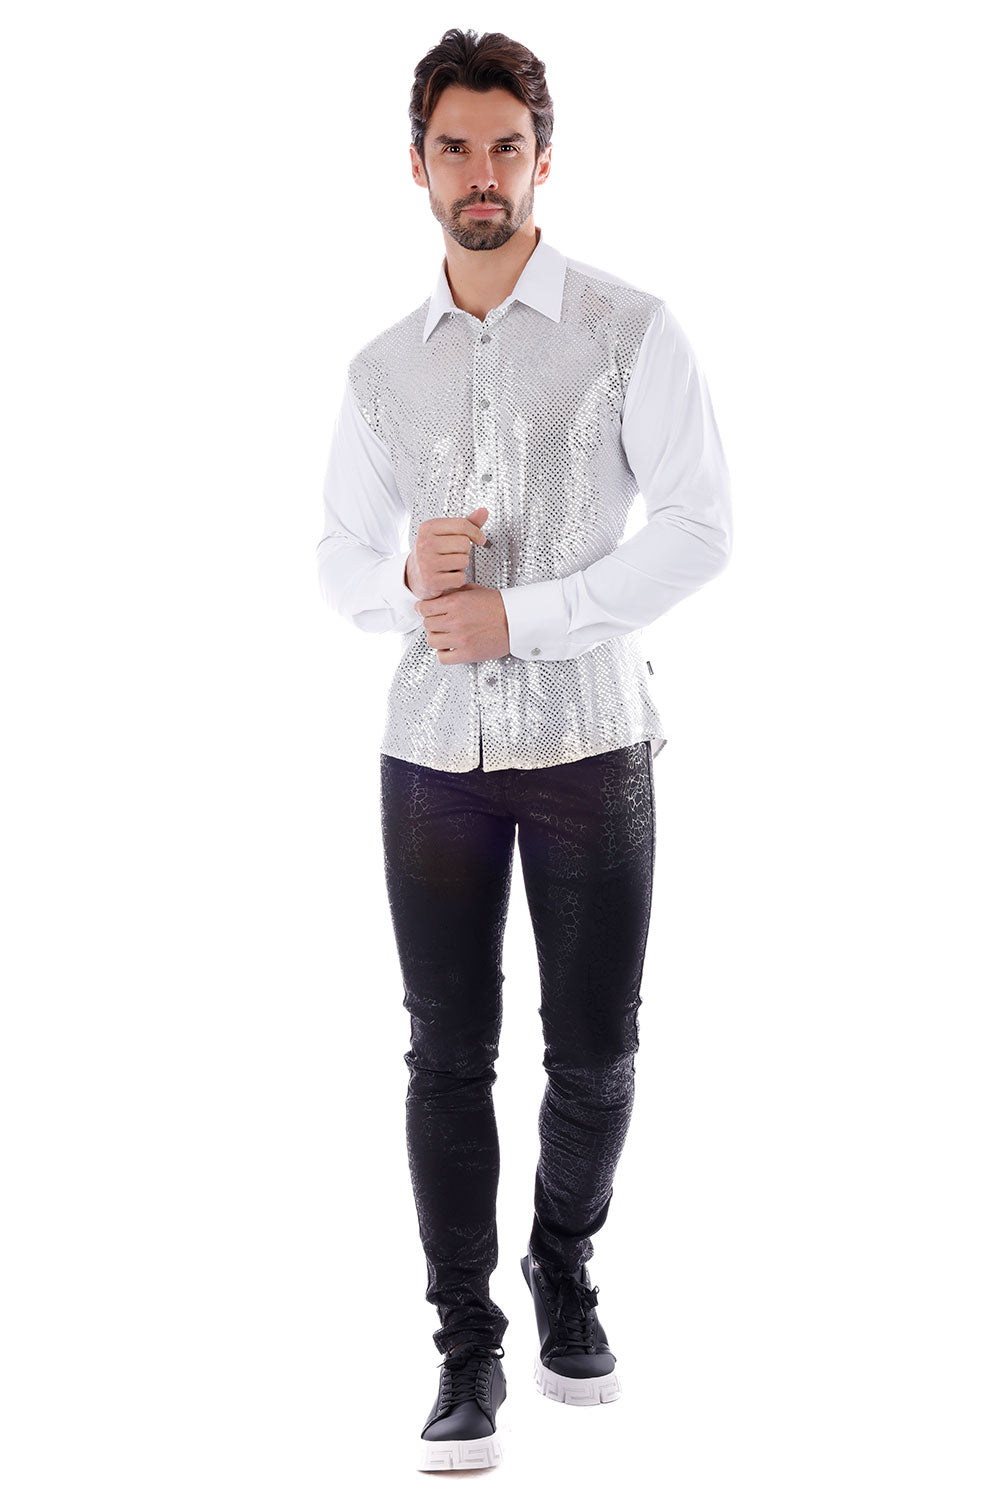 BARABAS Men's Polka Dot Linear Geometric Long Sleeve Shirt 4B43 White Silver